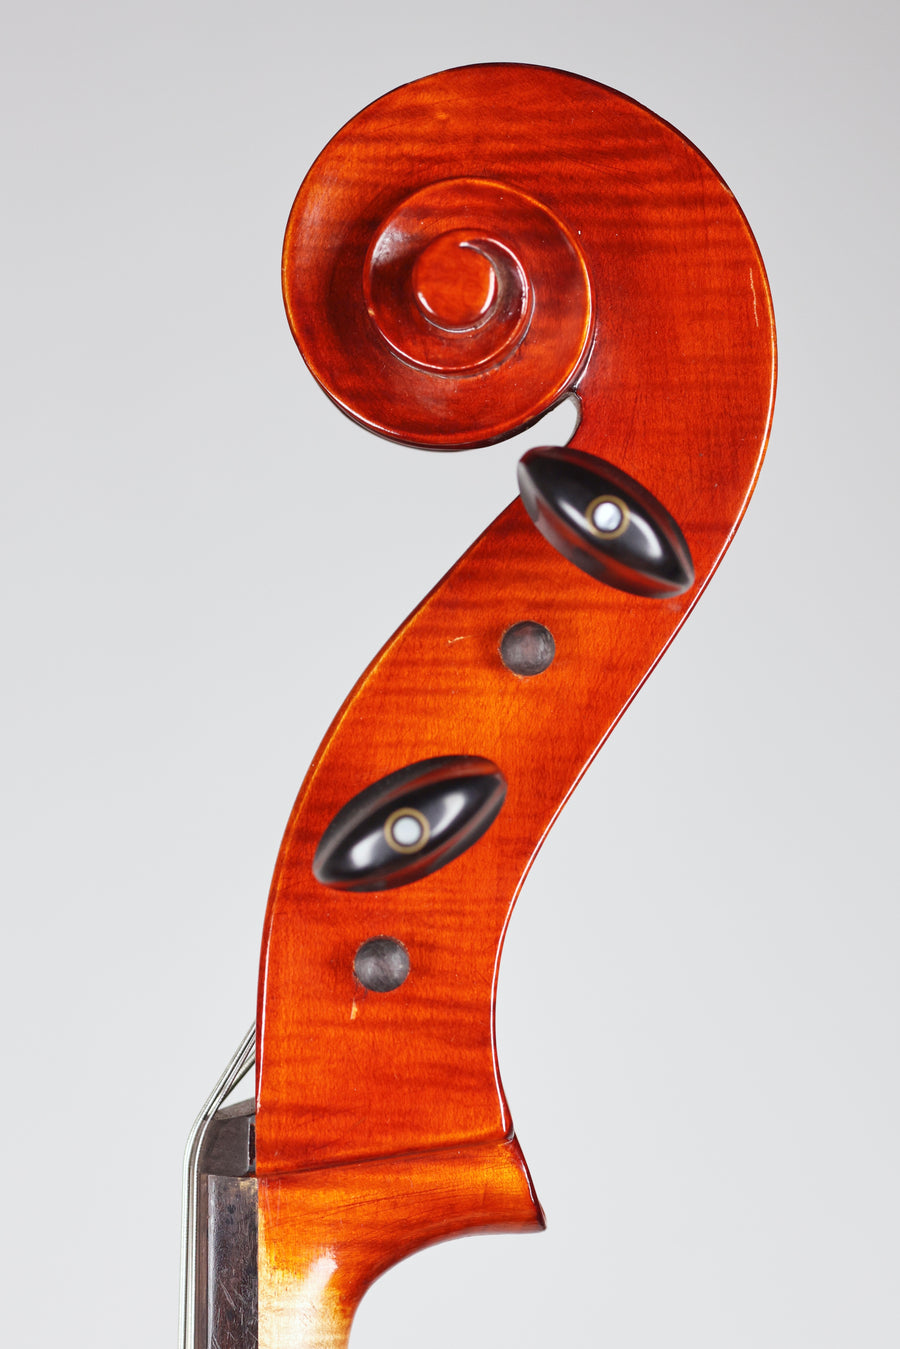 A German Cello From Benedikt Lang, 1986